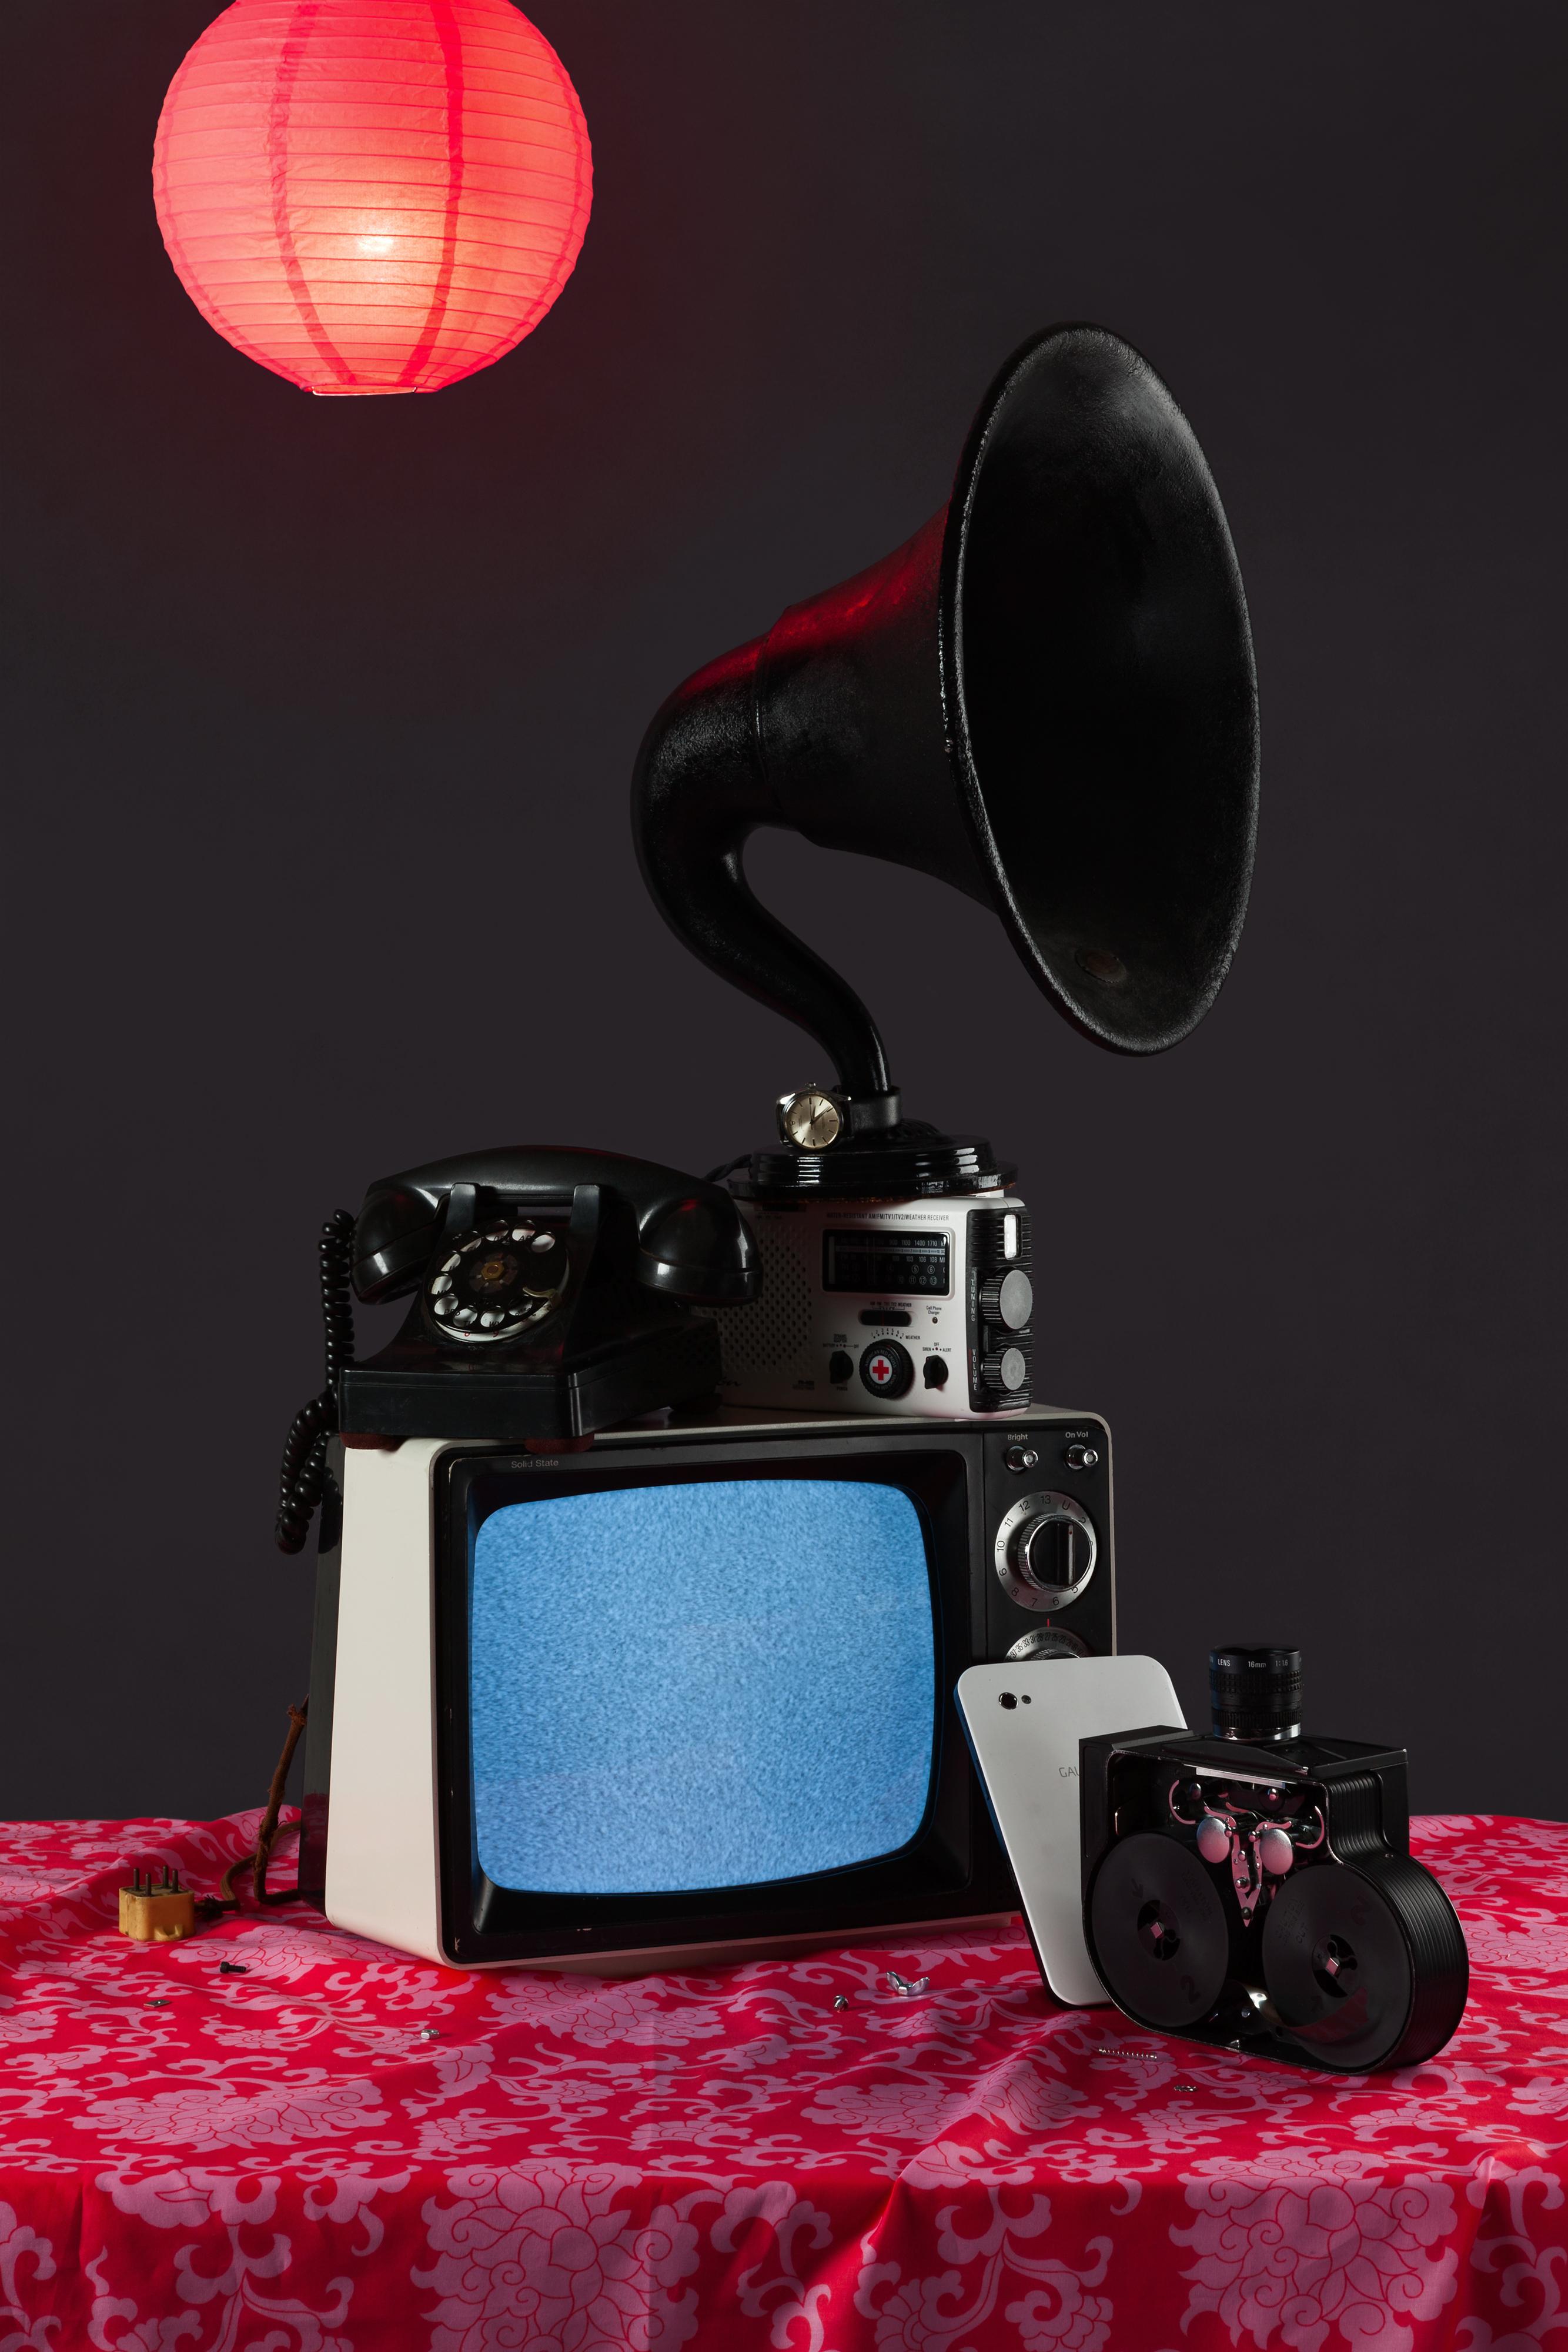 Jeanette May Still-Life Photograph - “Tech Vanitas: Black & White TV” Contemporary Still-life Photograph Vintage Tech